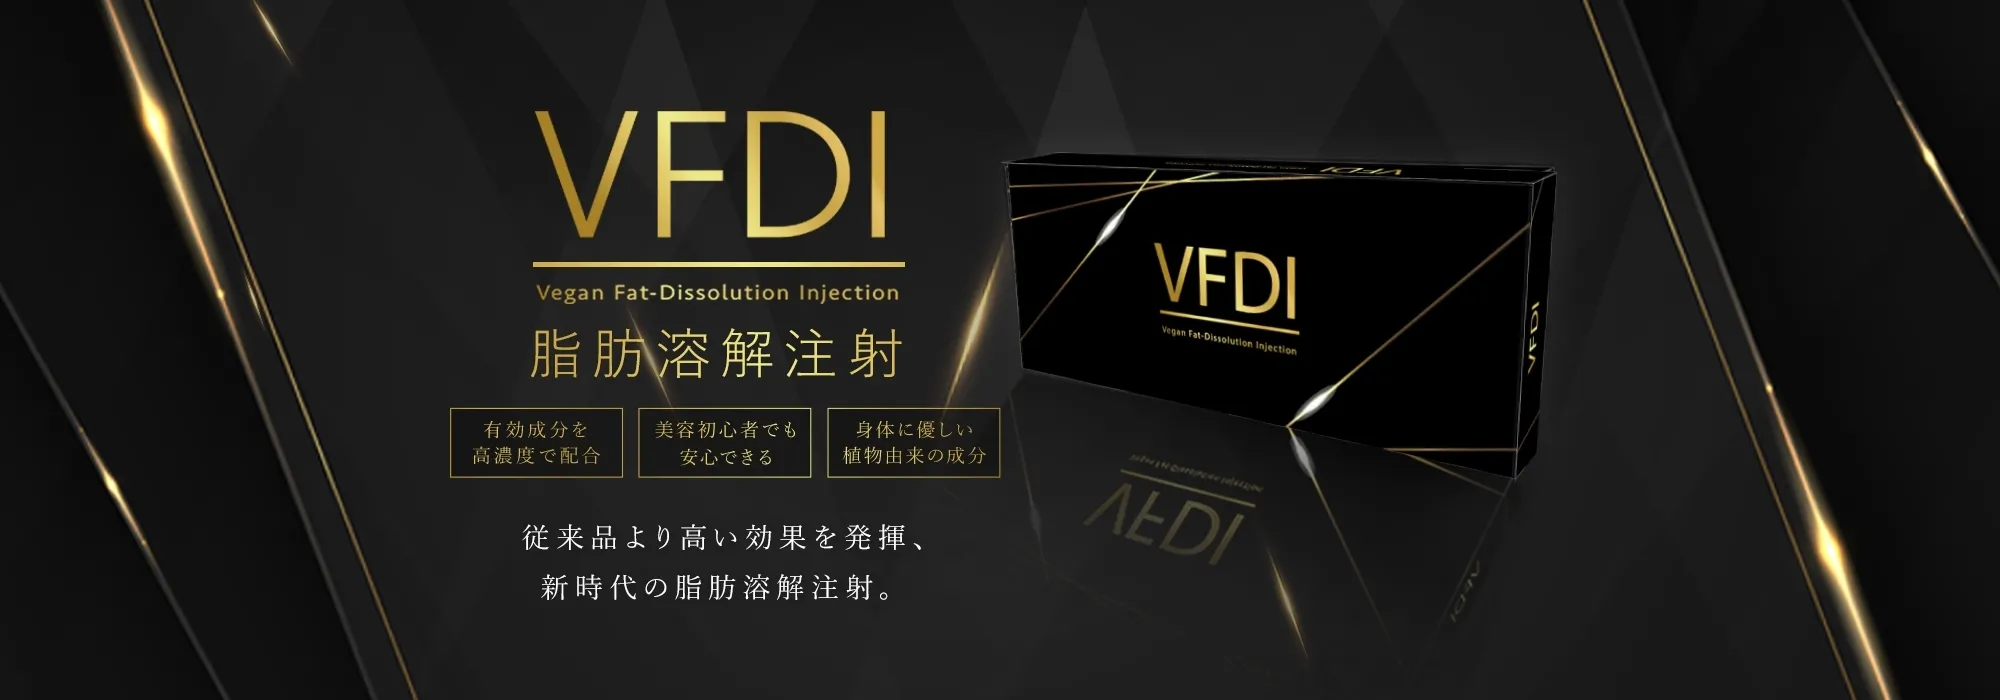 VFDI 脂肪溶解注射